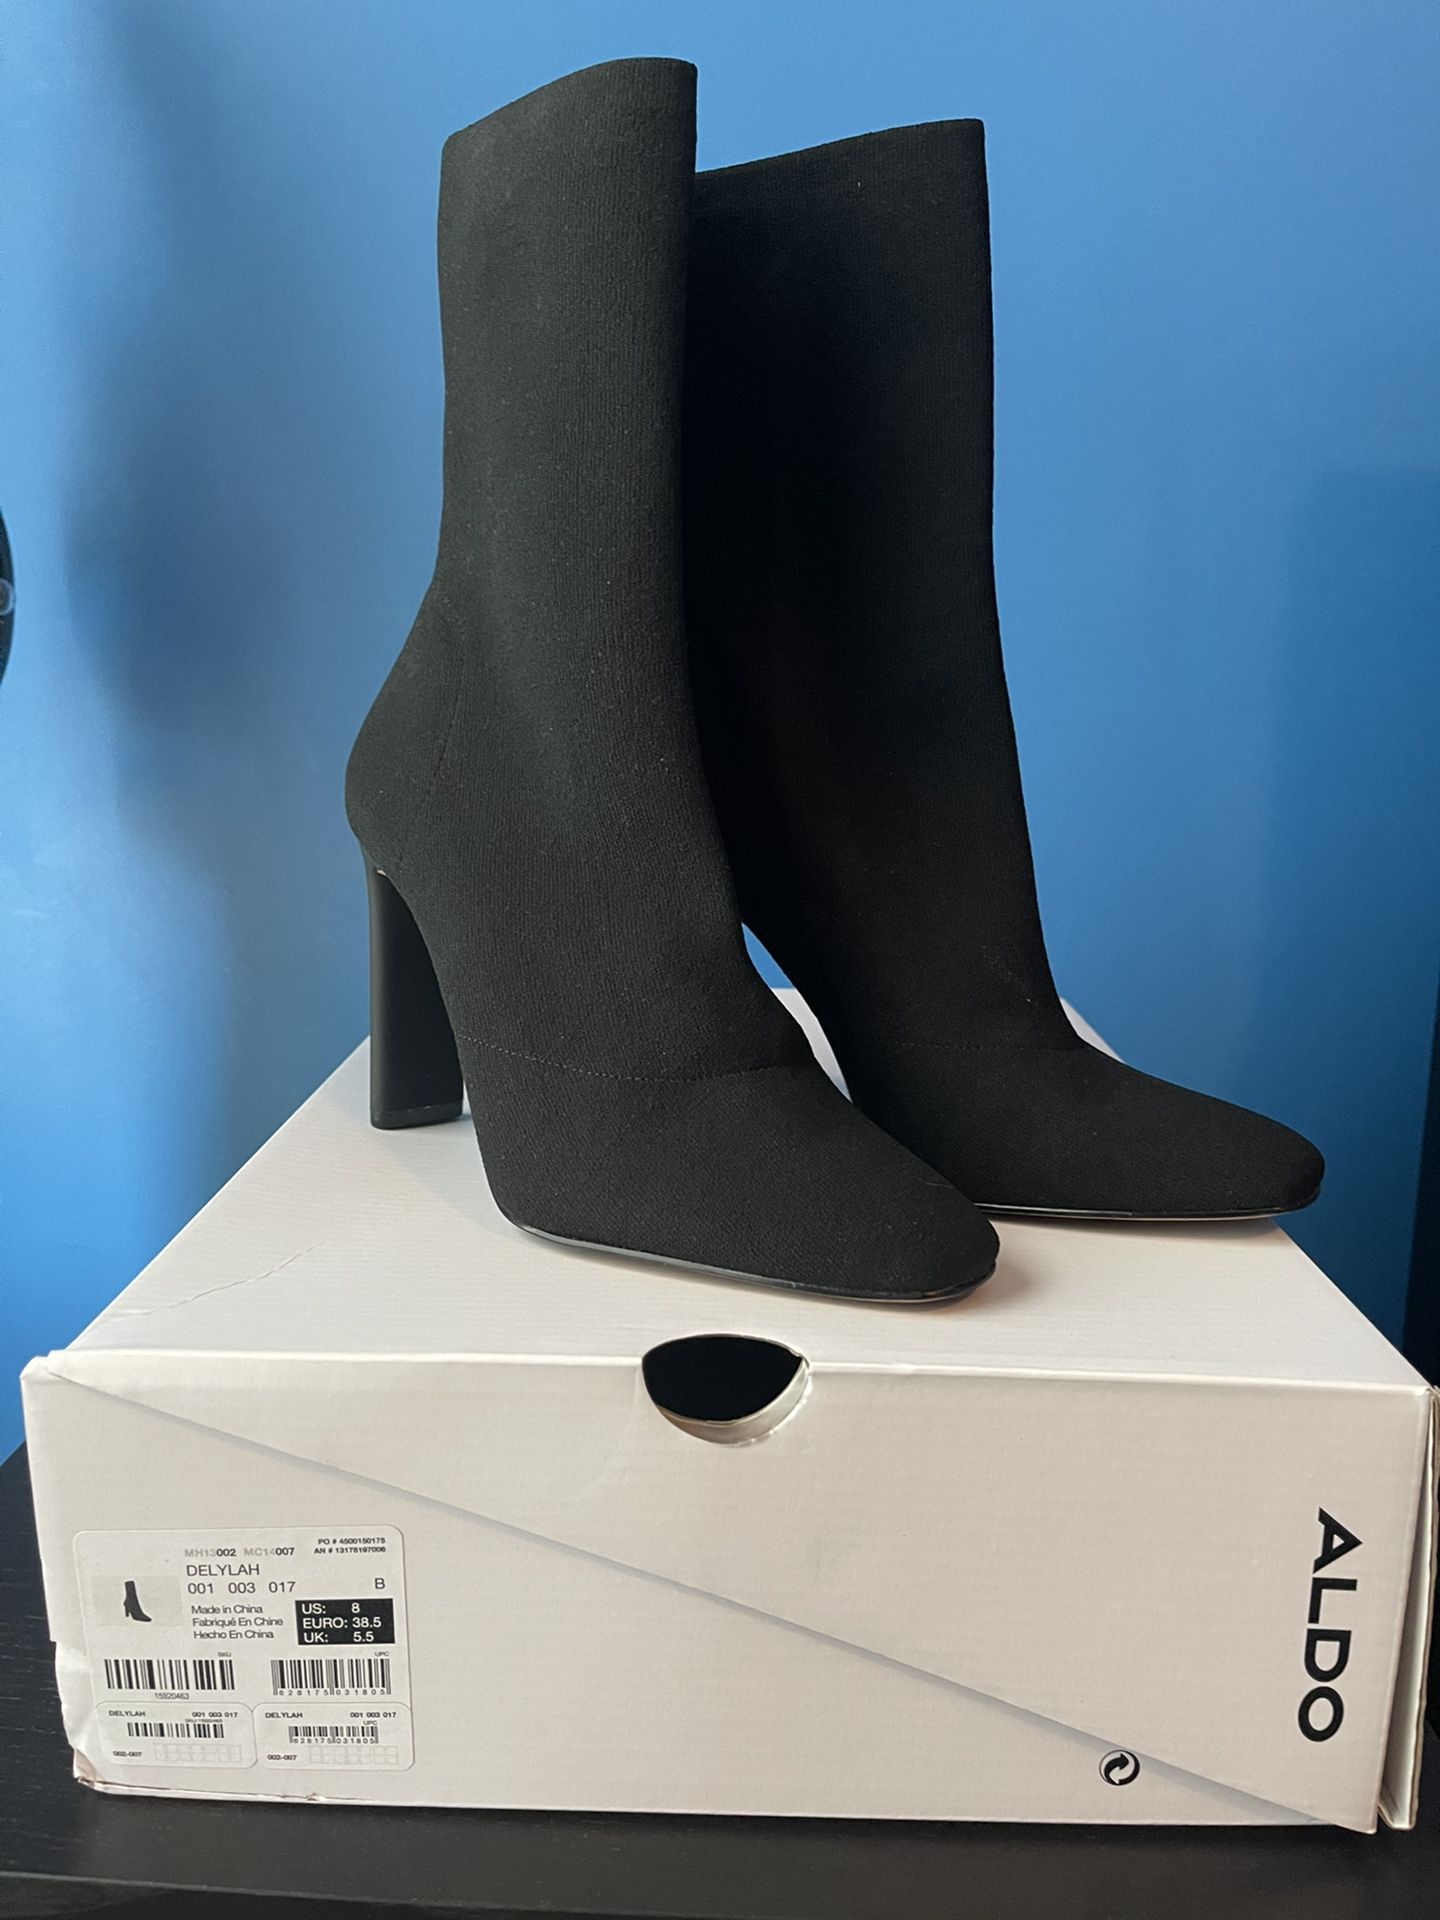 Aldo Women’s Black boots Size 8